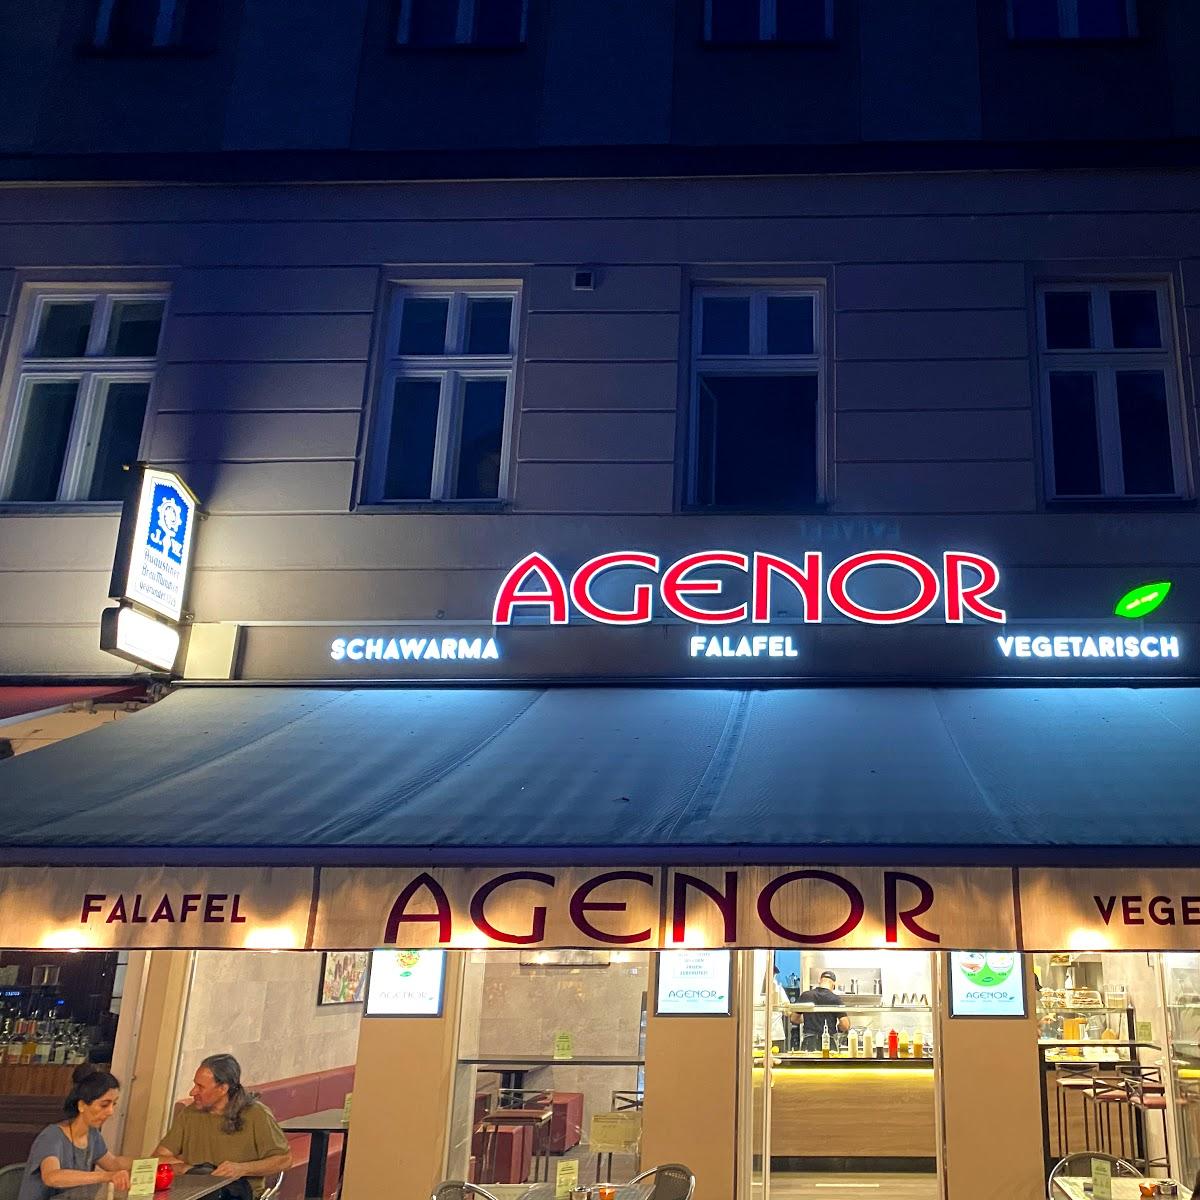 Restaurant "Agenor Falafel Berlin" in Berlin